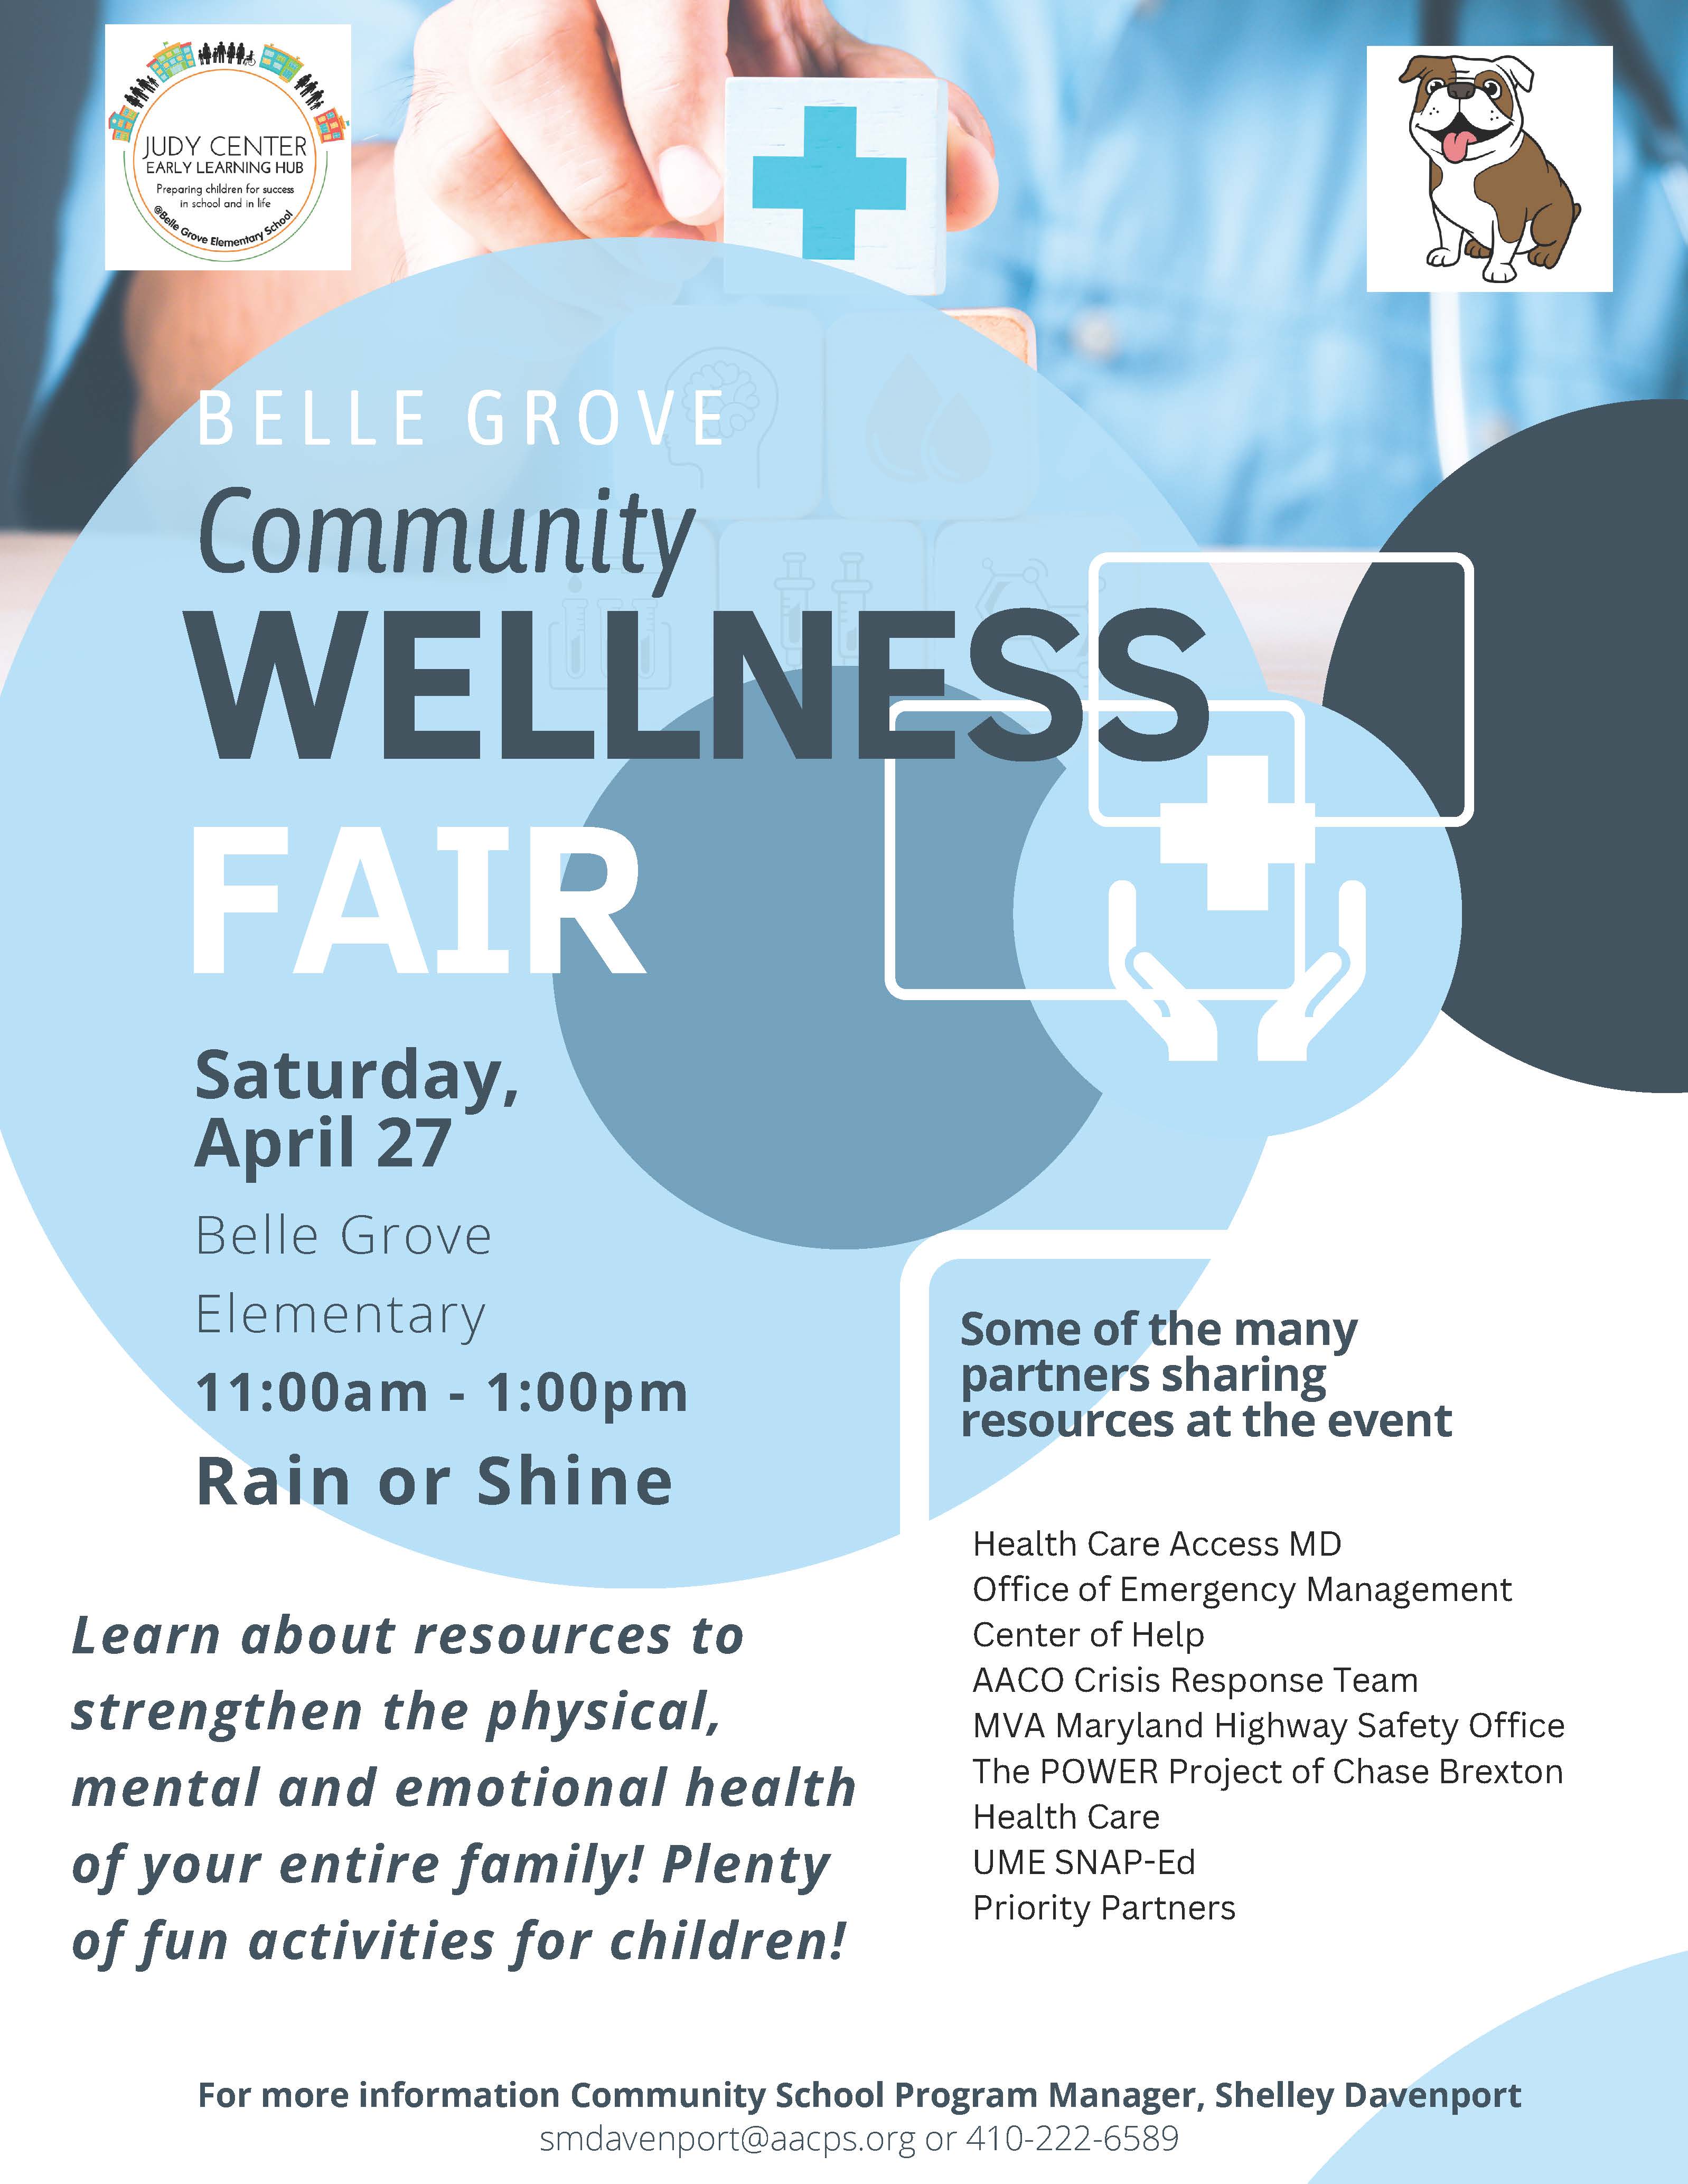 Belle Grove Community Wellness Fair - Saturday April 27